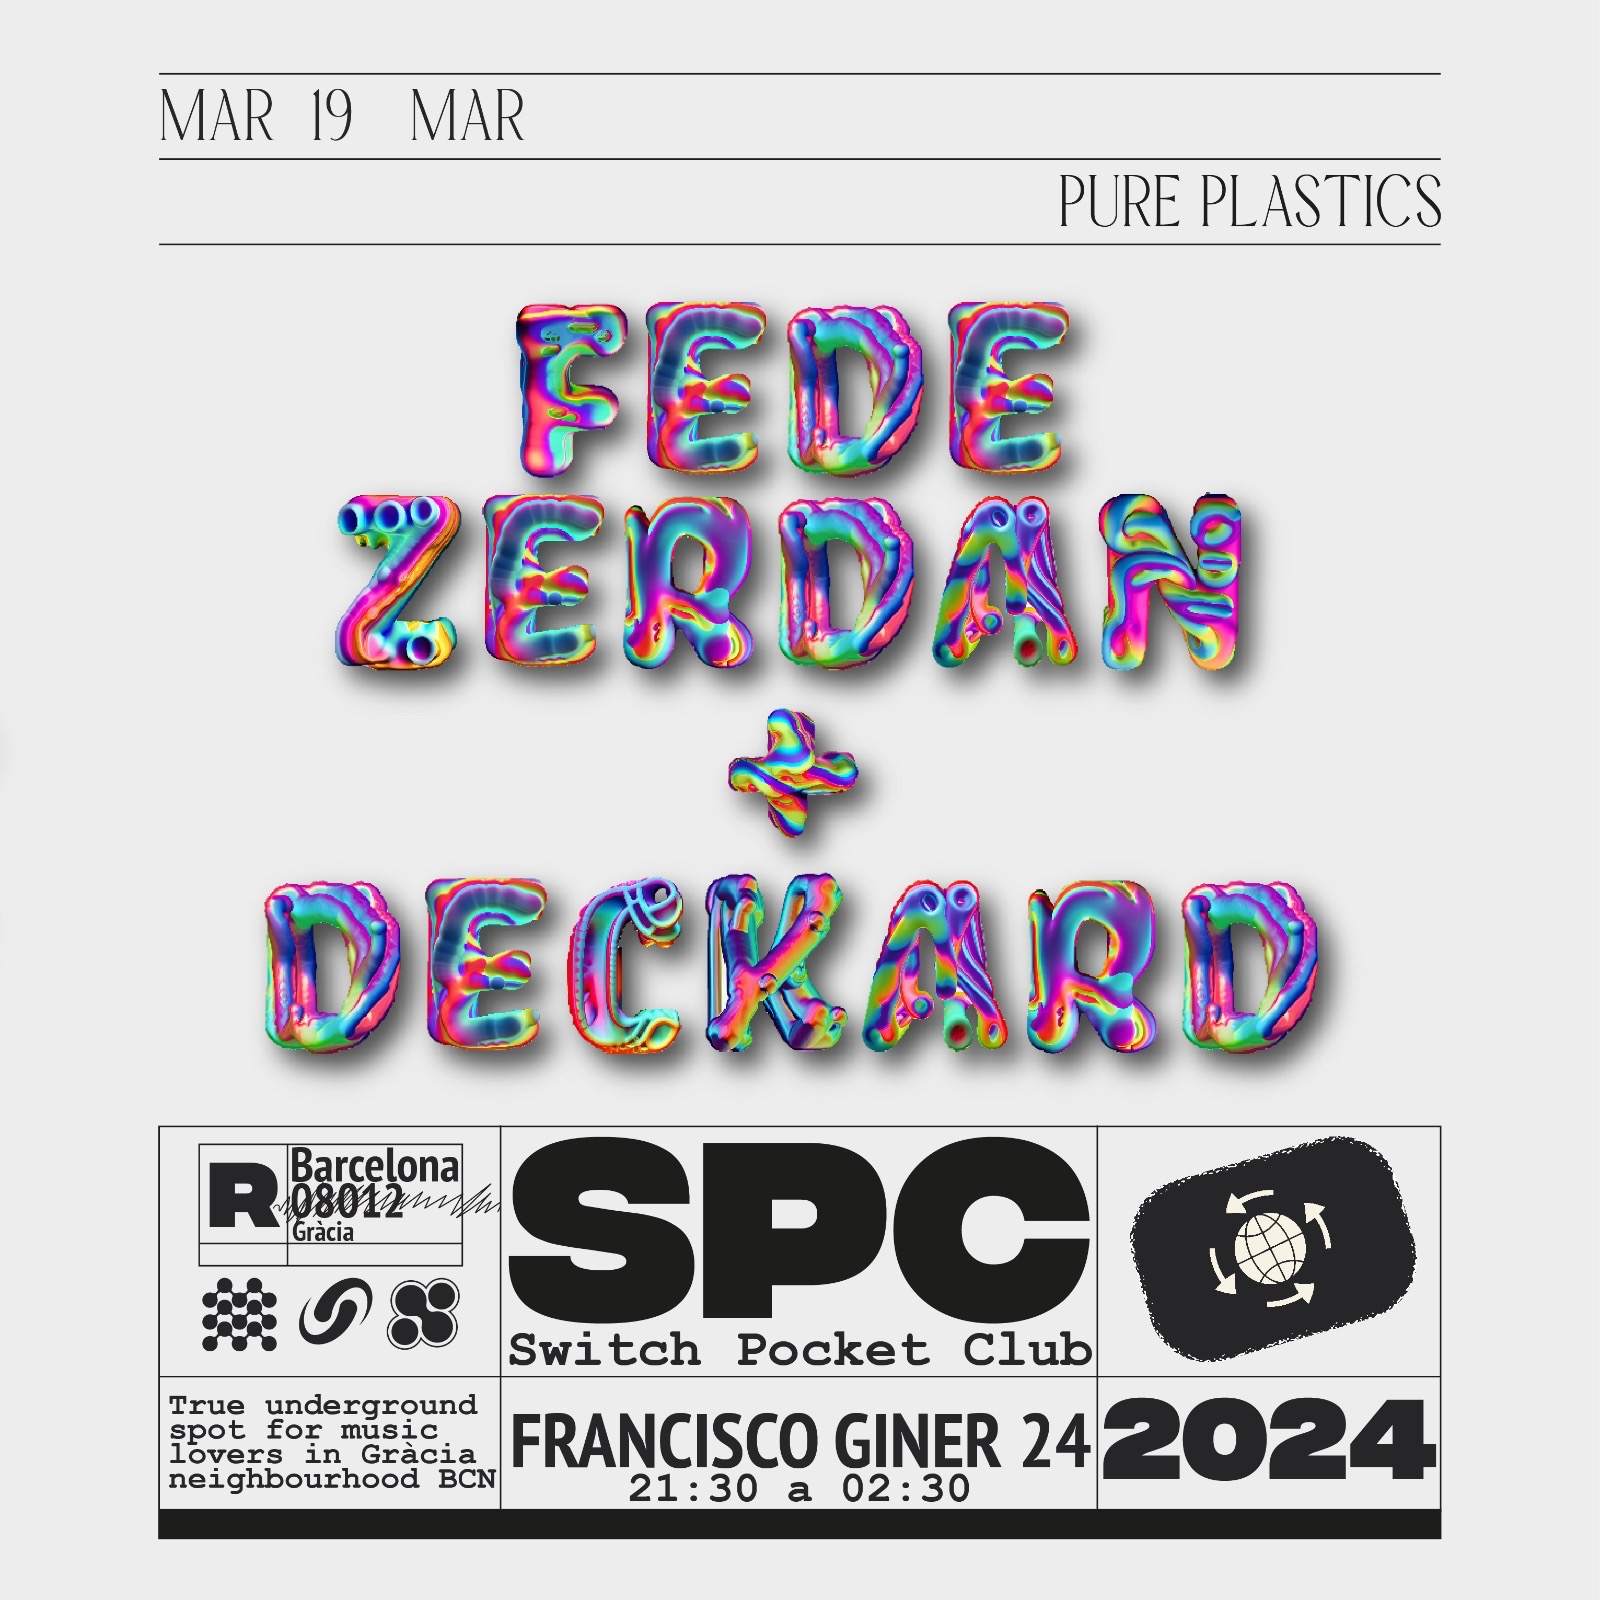 Pure Plastics: Fede Zerdan, Deckard - フライヤー表